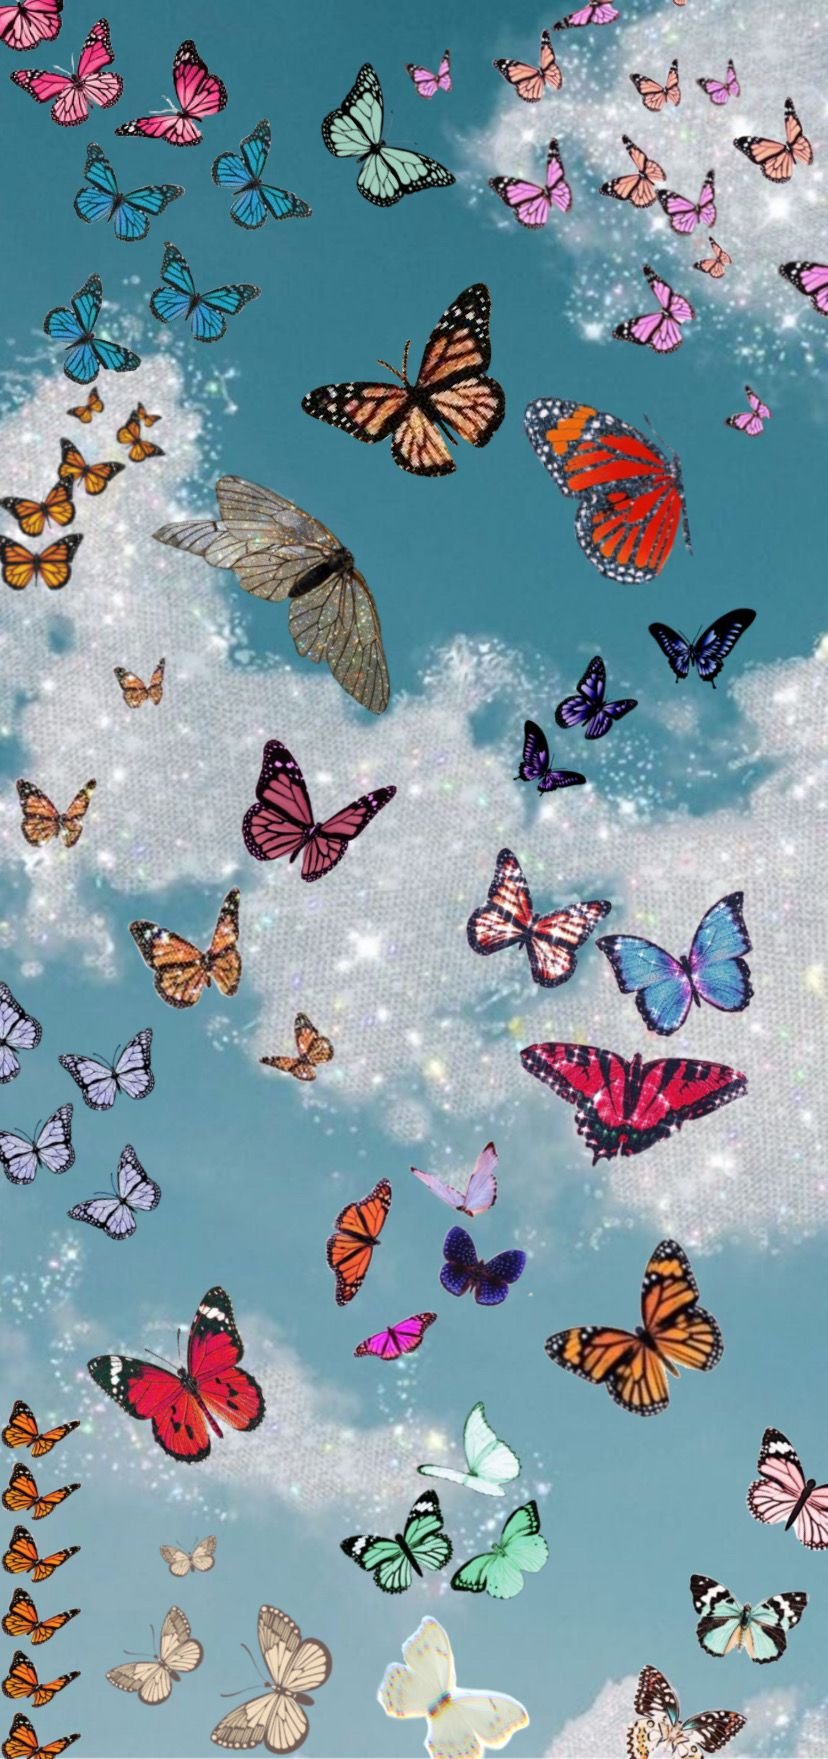 Butterfly wallpaper aesthetic  Blue butterfly wallpaper background designs